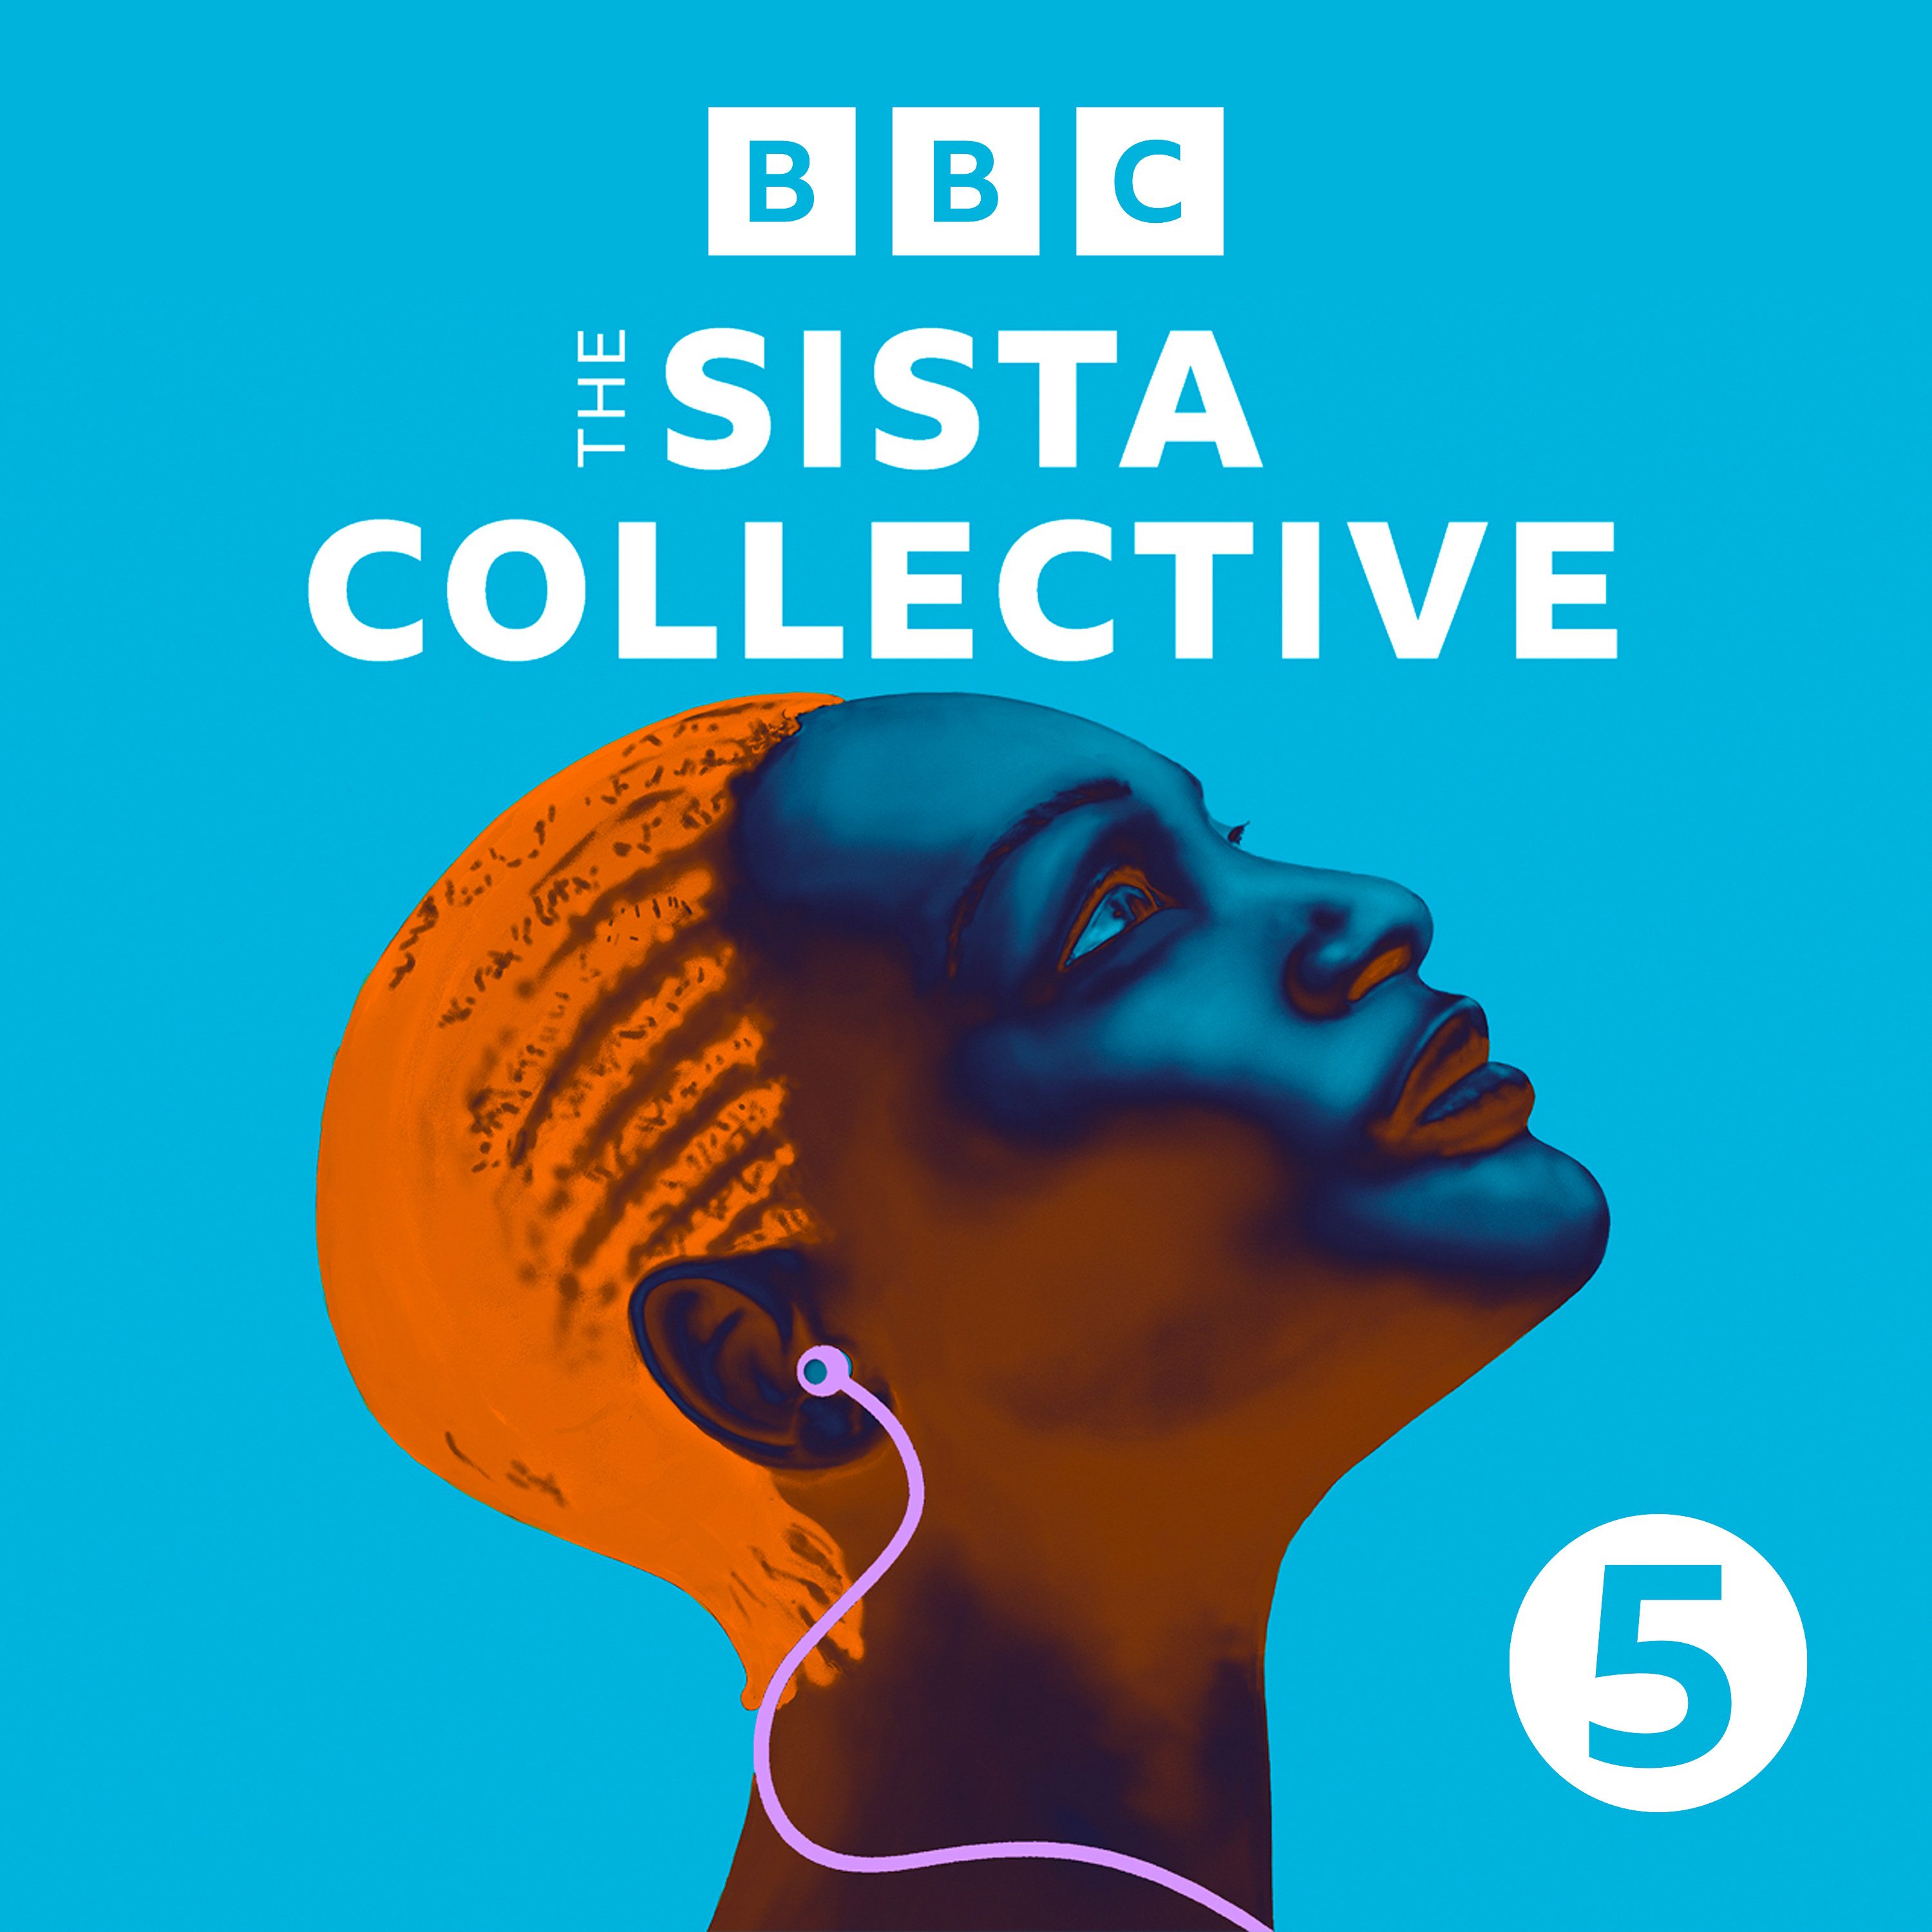 The Sista Collective